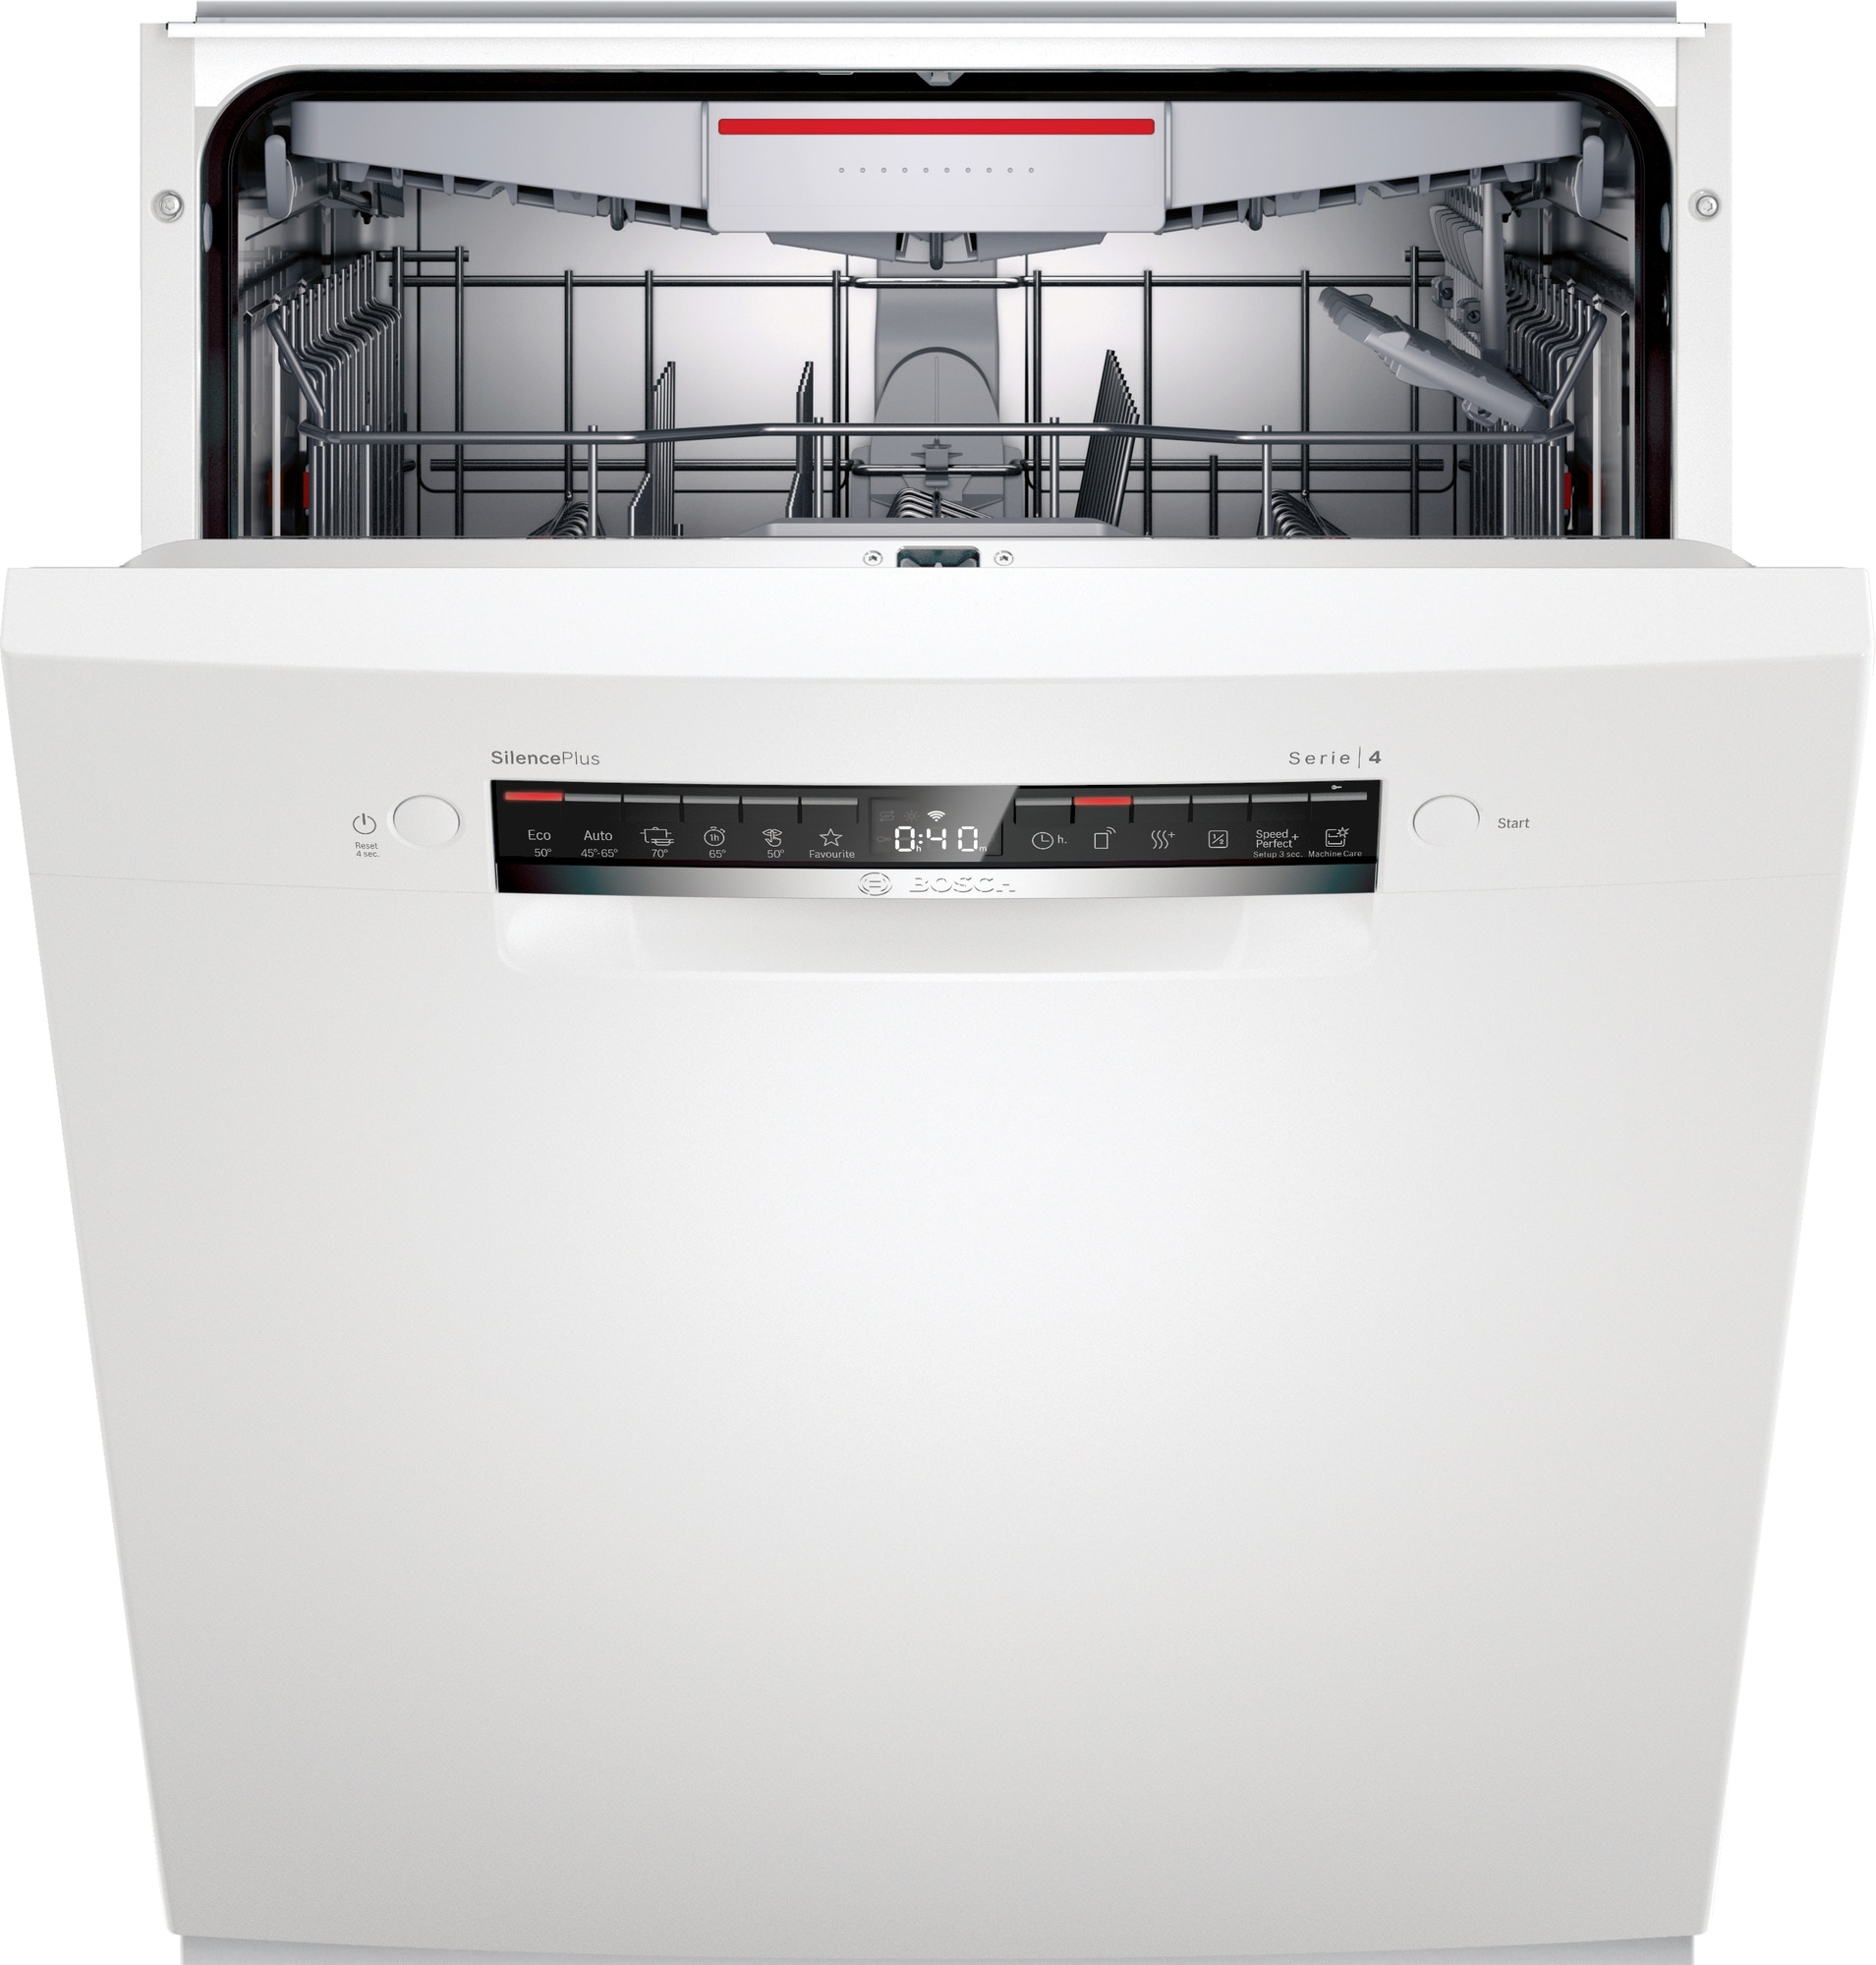 Effektiv og stilfuld Bosch opvaskemaskine - Spar tid og energi i køkkenet.